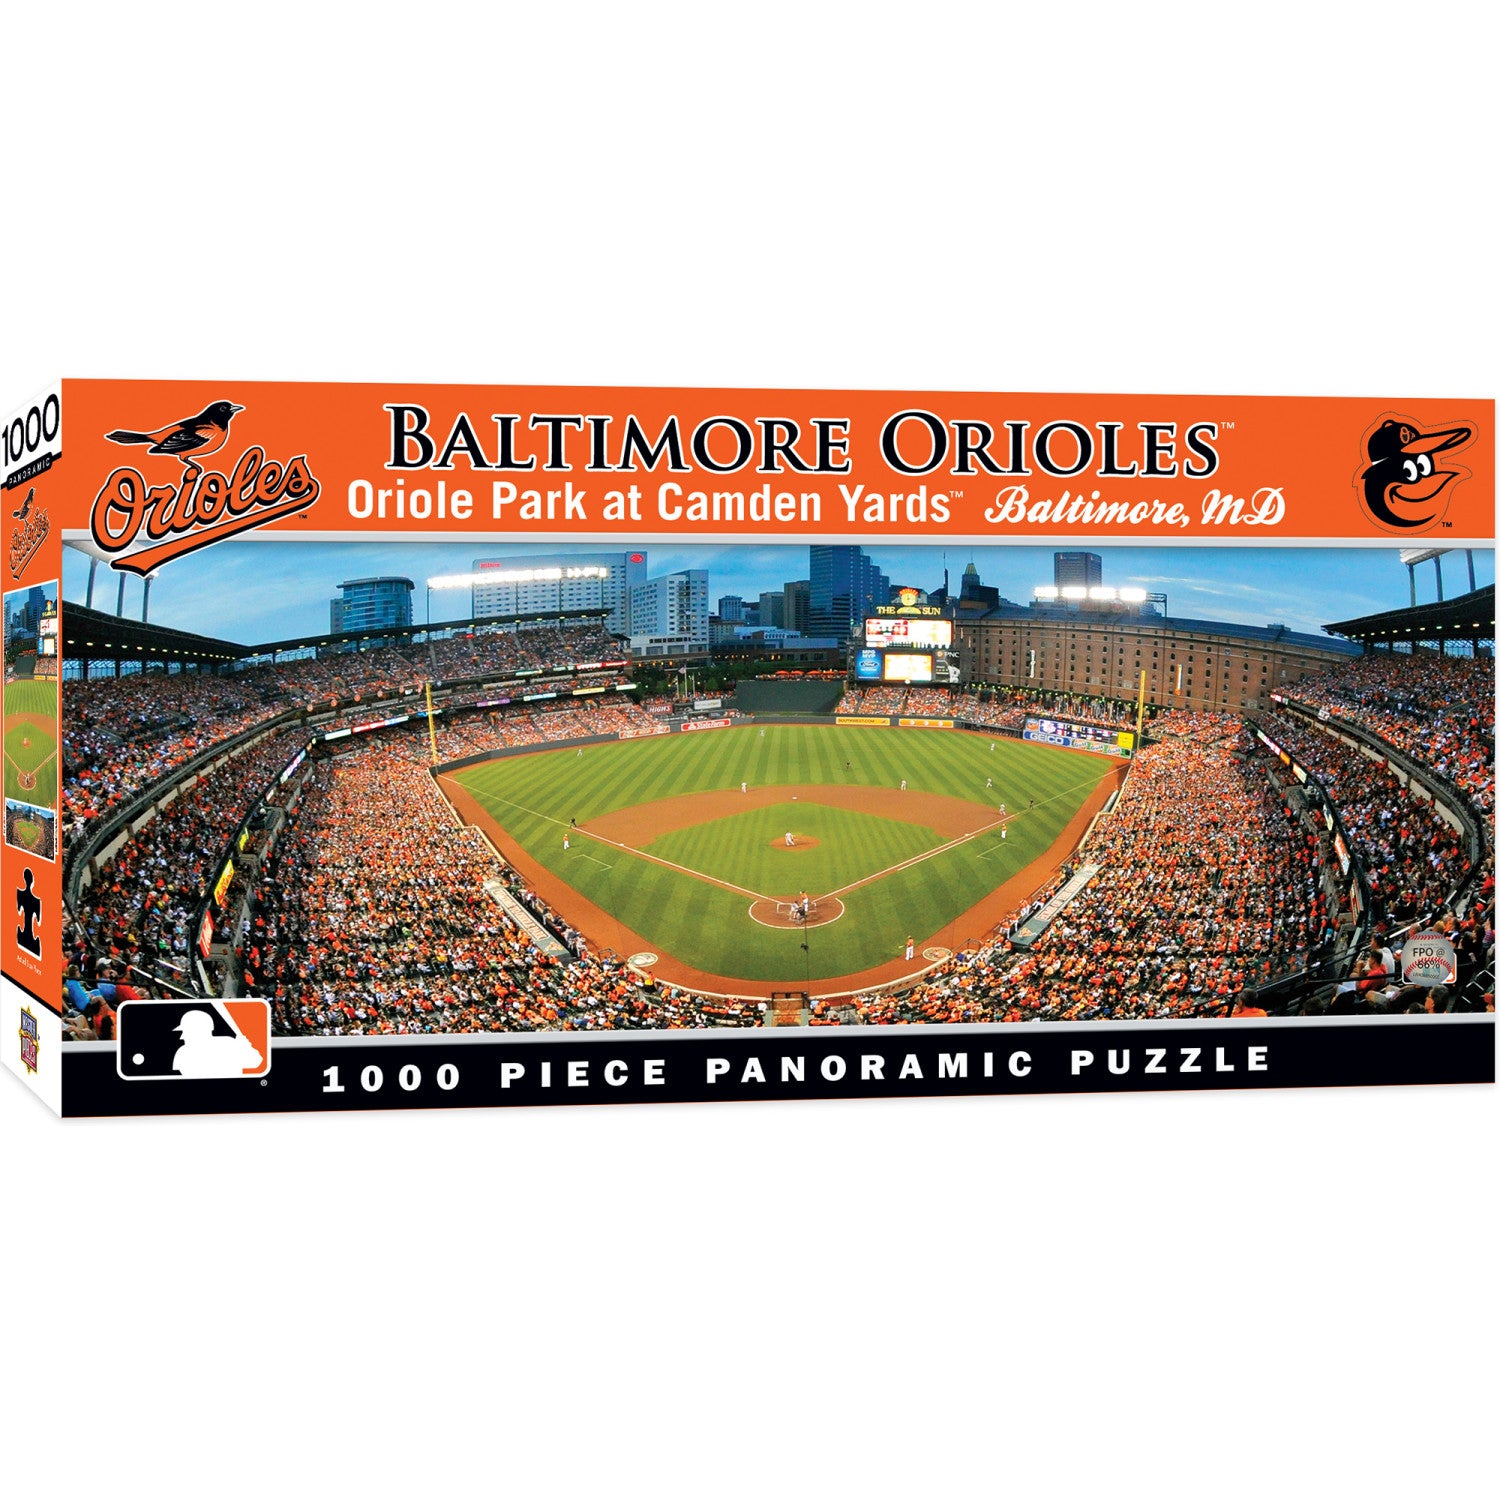 Baltimore Orioles - 1000 Piece Panoramic Puzzle